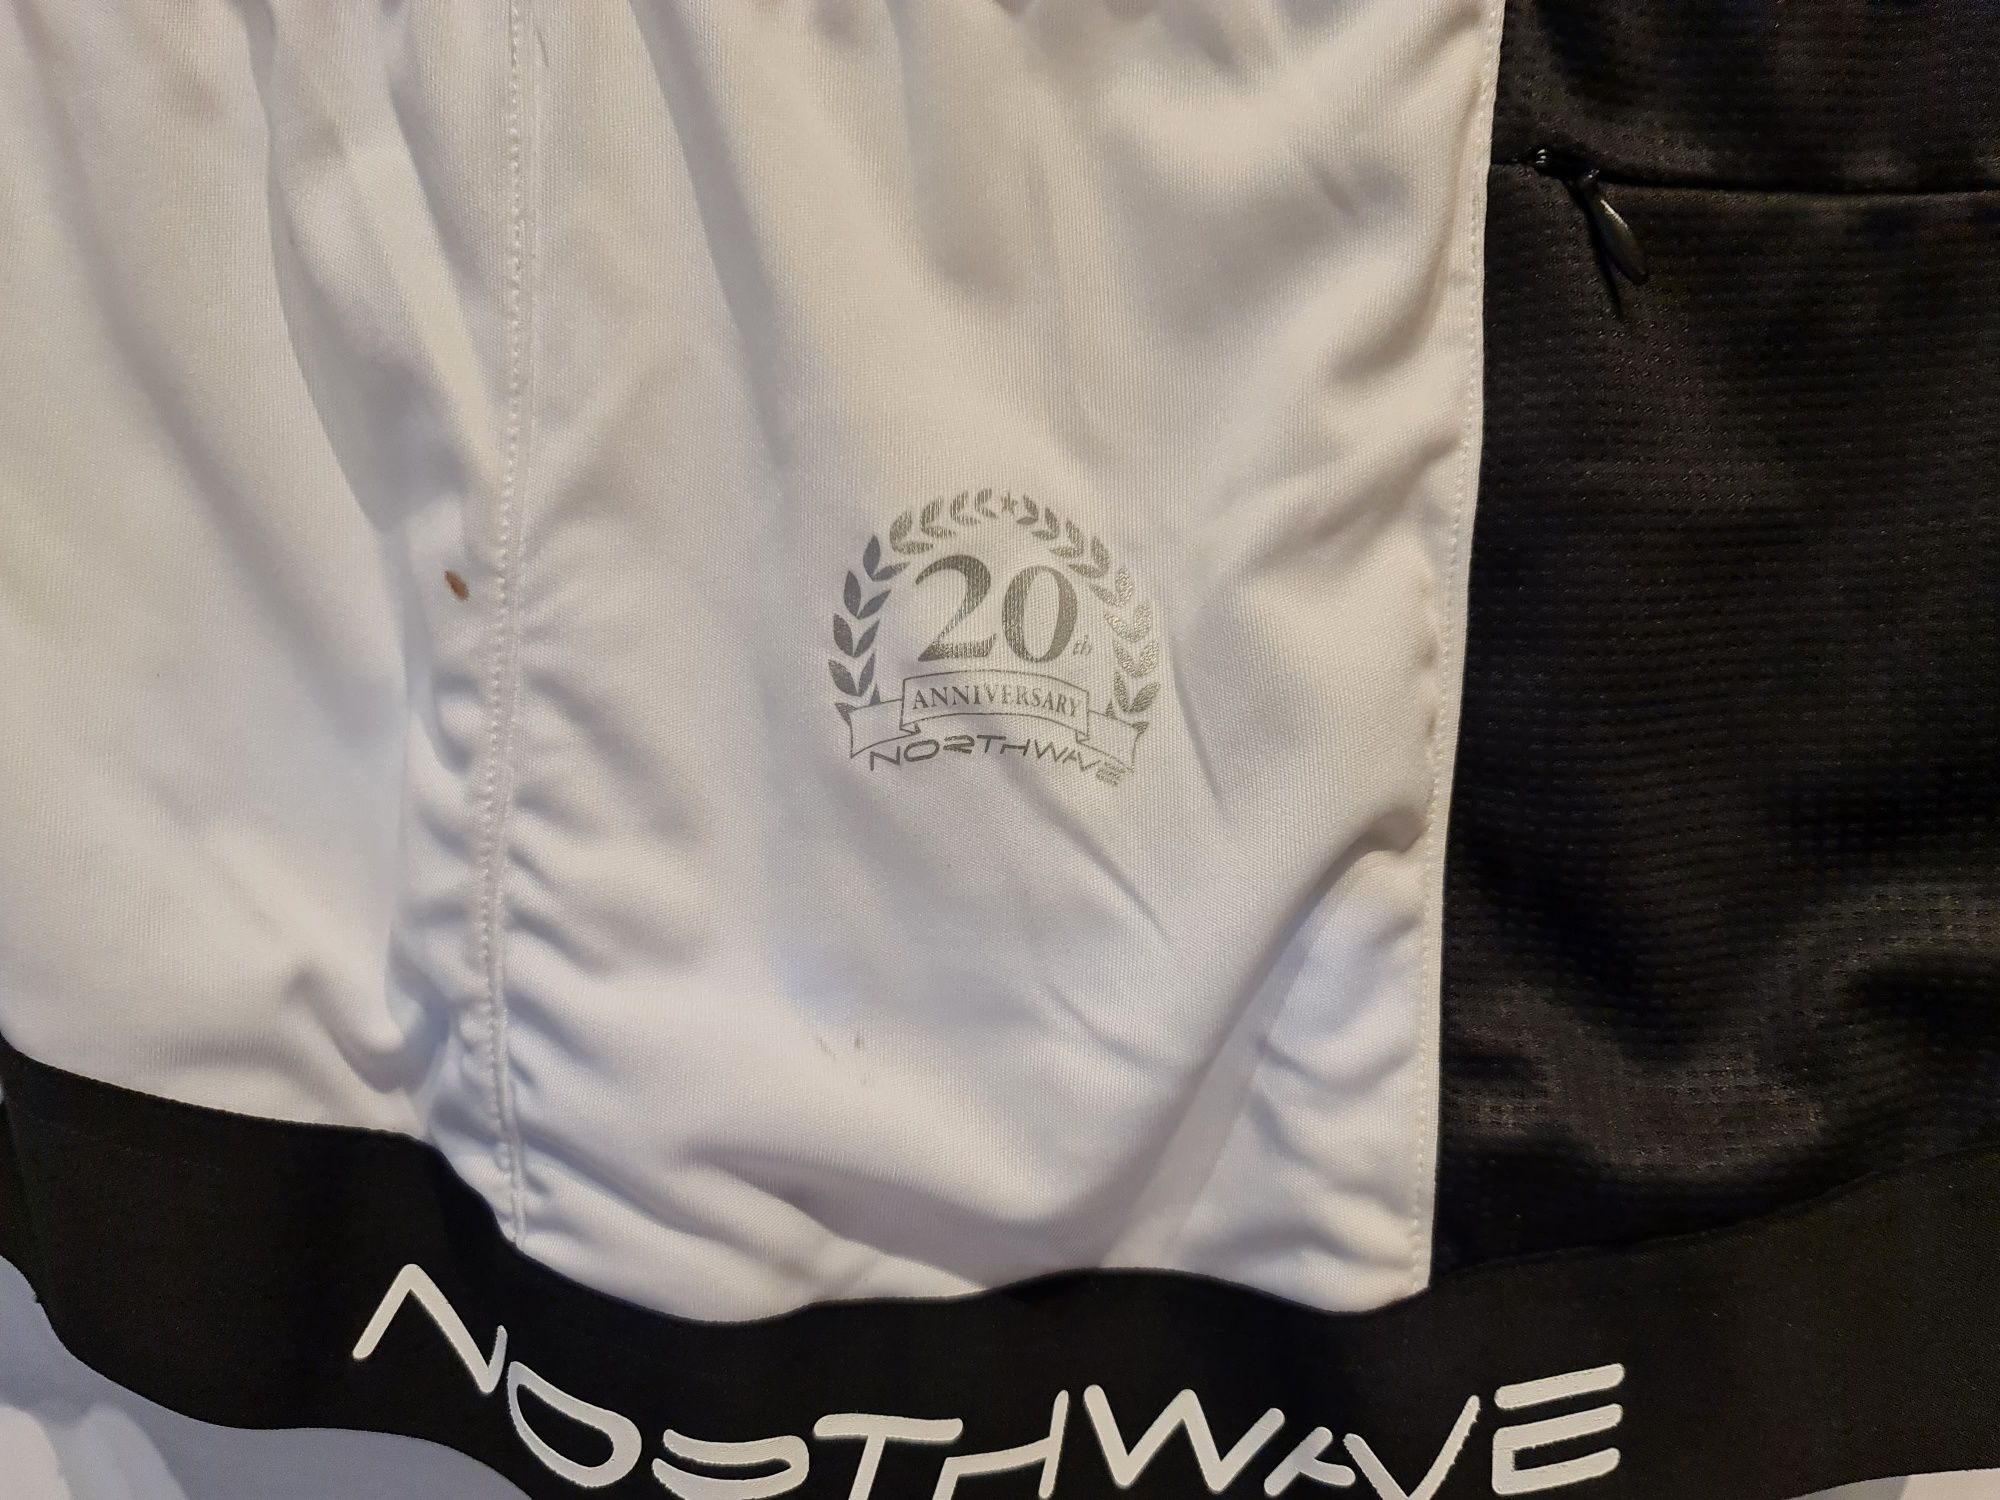 Koszulka rowerowa Northwave Celebration 25th Anniversary r.XL